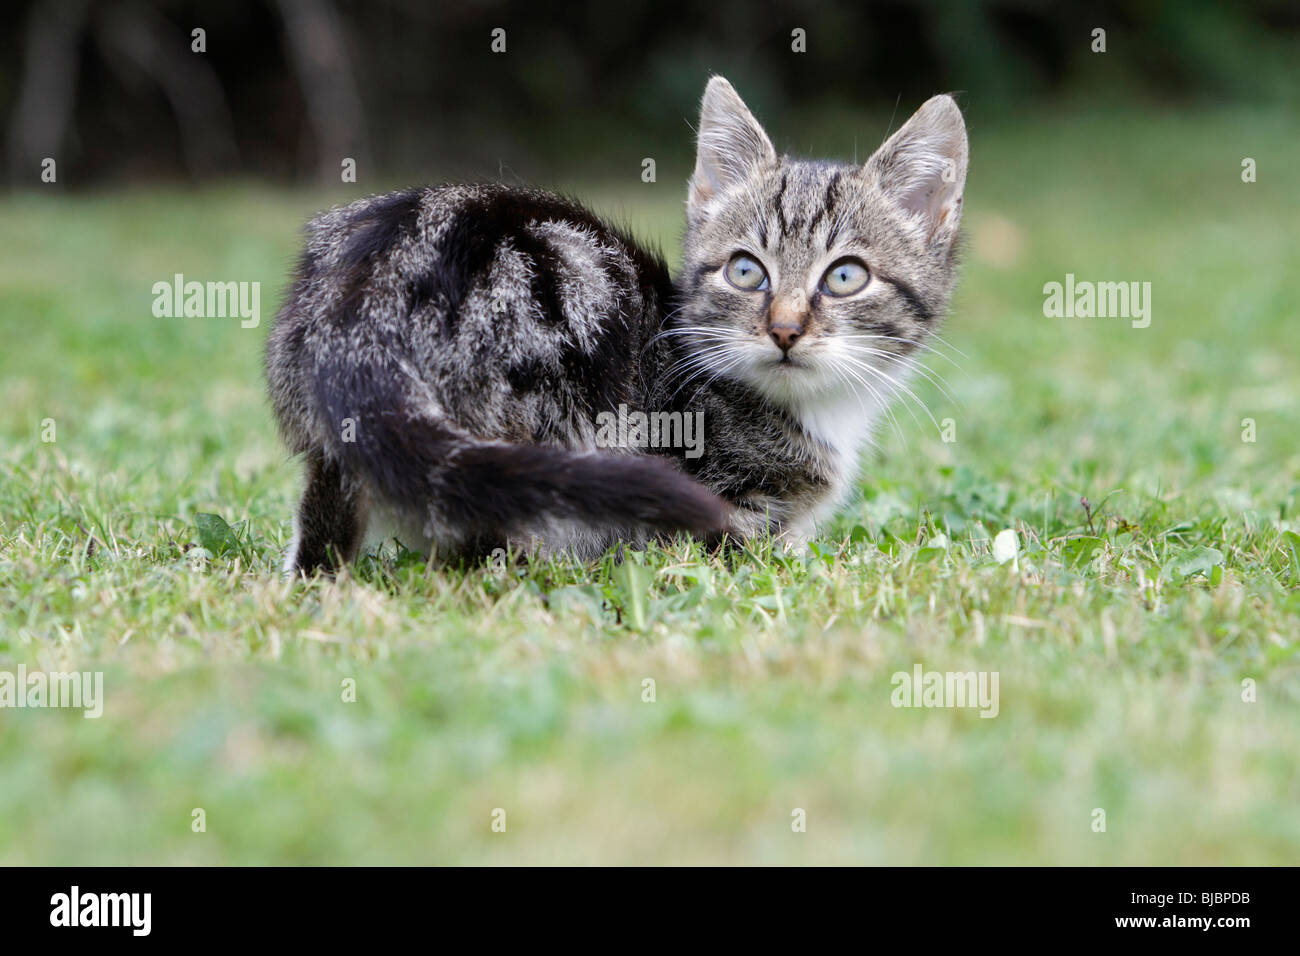 Cat, young grey striped kitten in garden Stock Photo